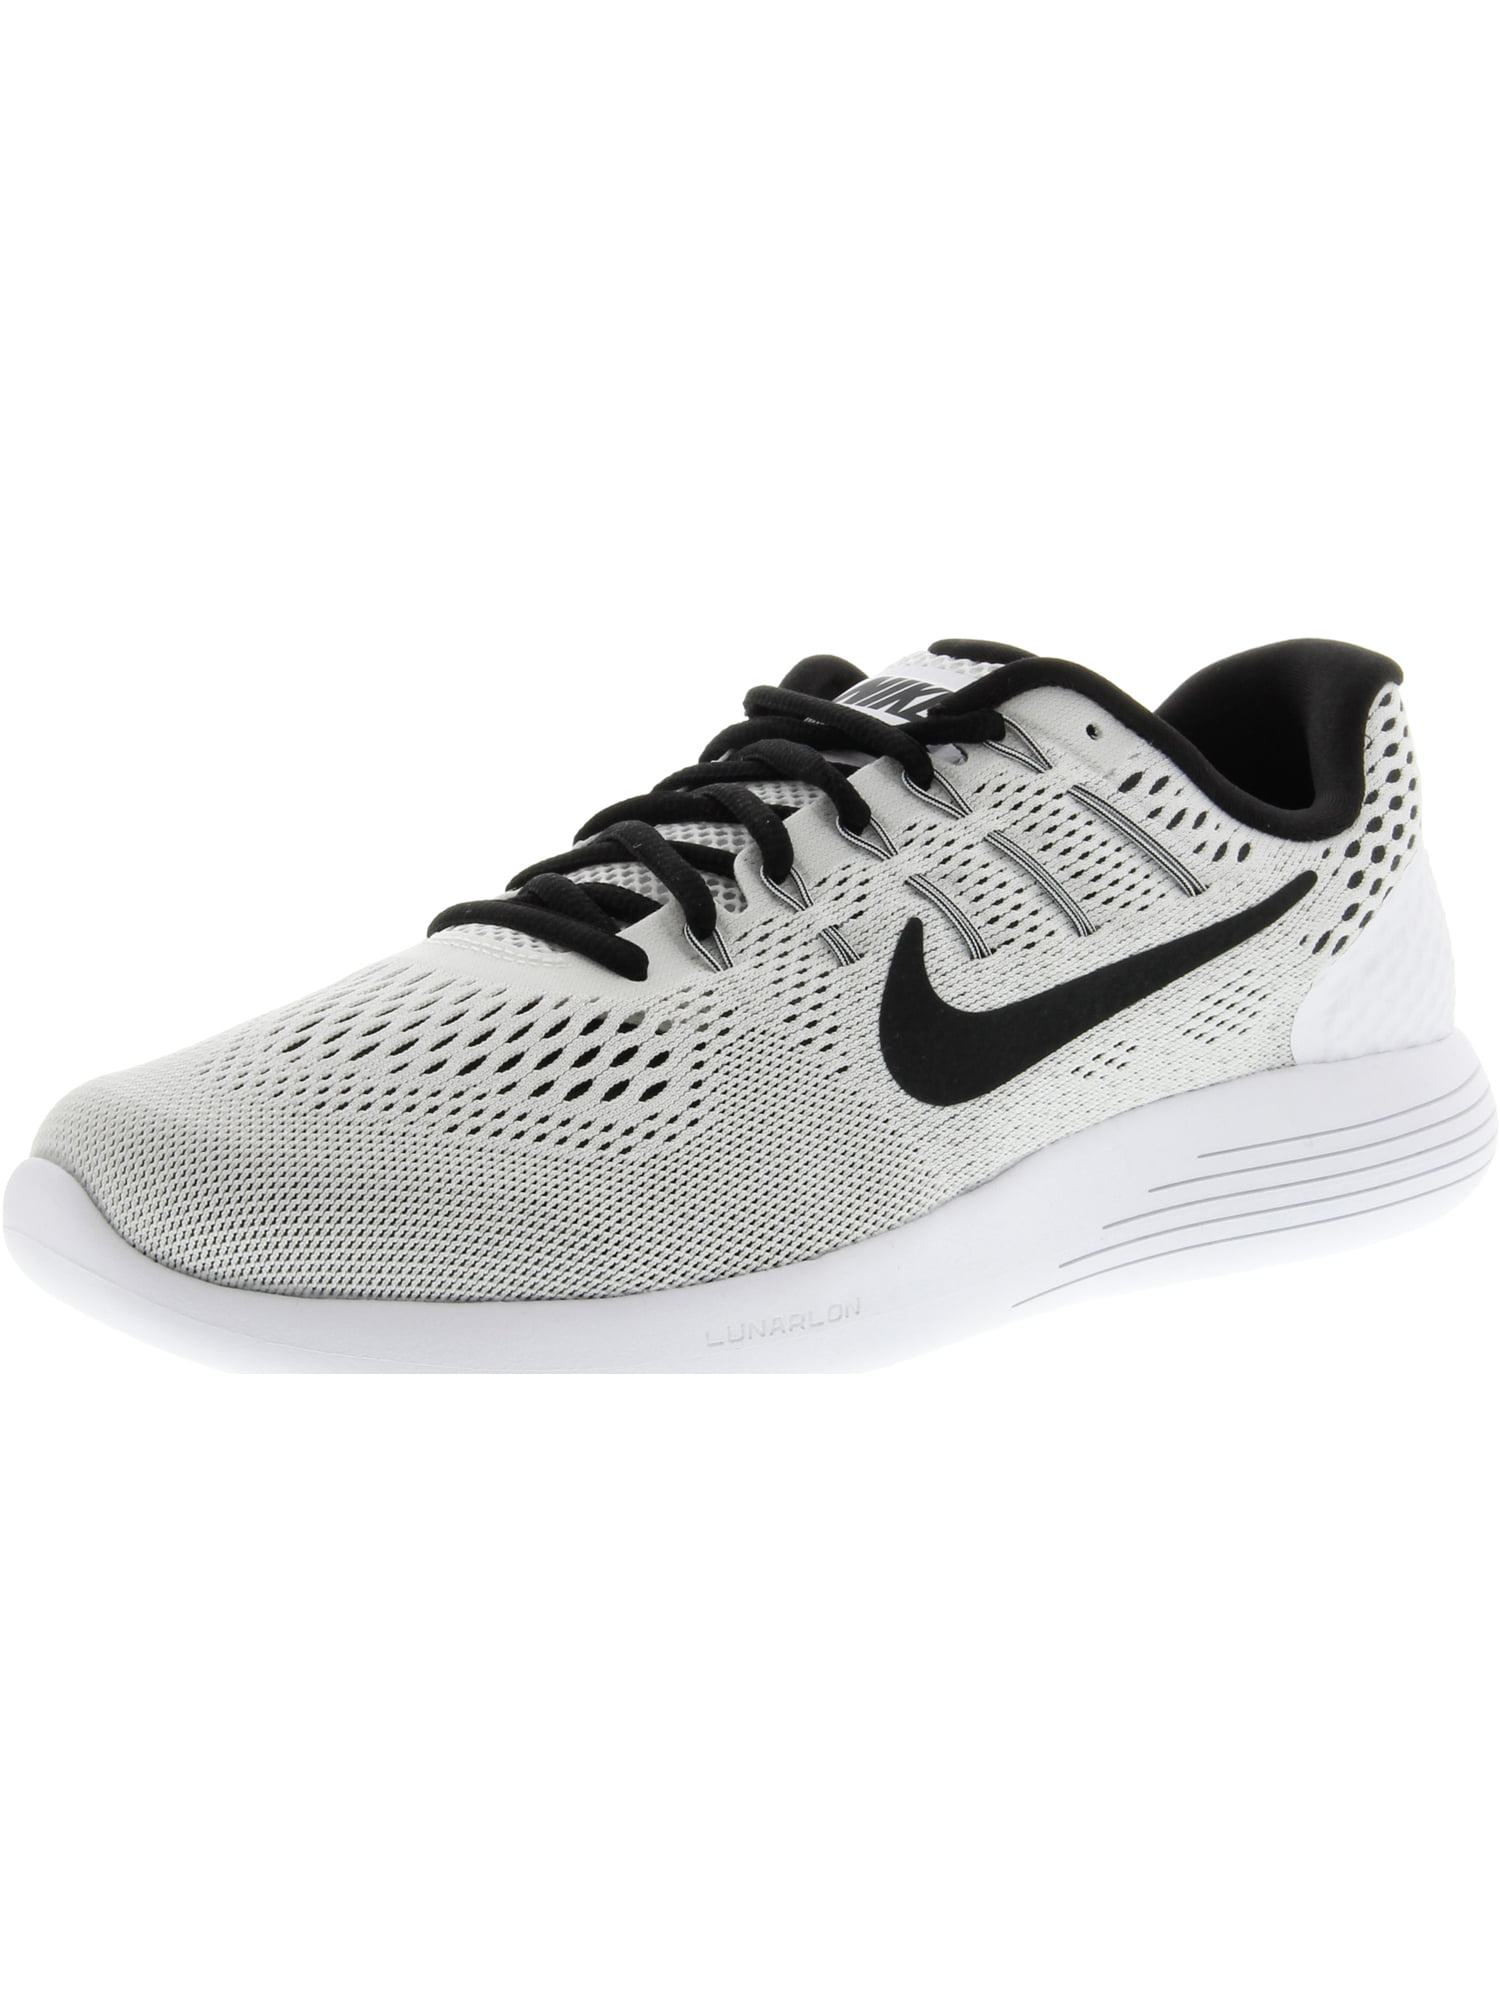 Abandonado precoz Edredón Nike Men's Lunarglide 8 White / Black Ankle-High Running Shoe - 10.5M -  Walmart.com